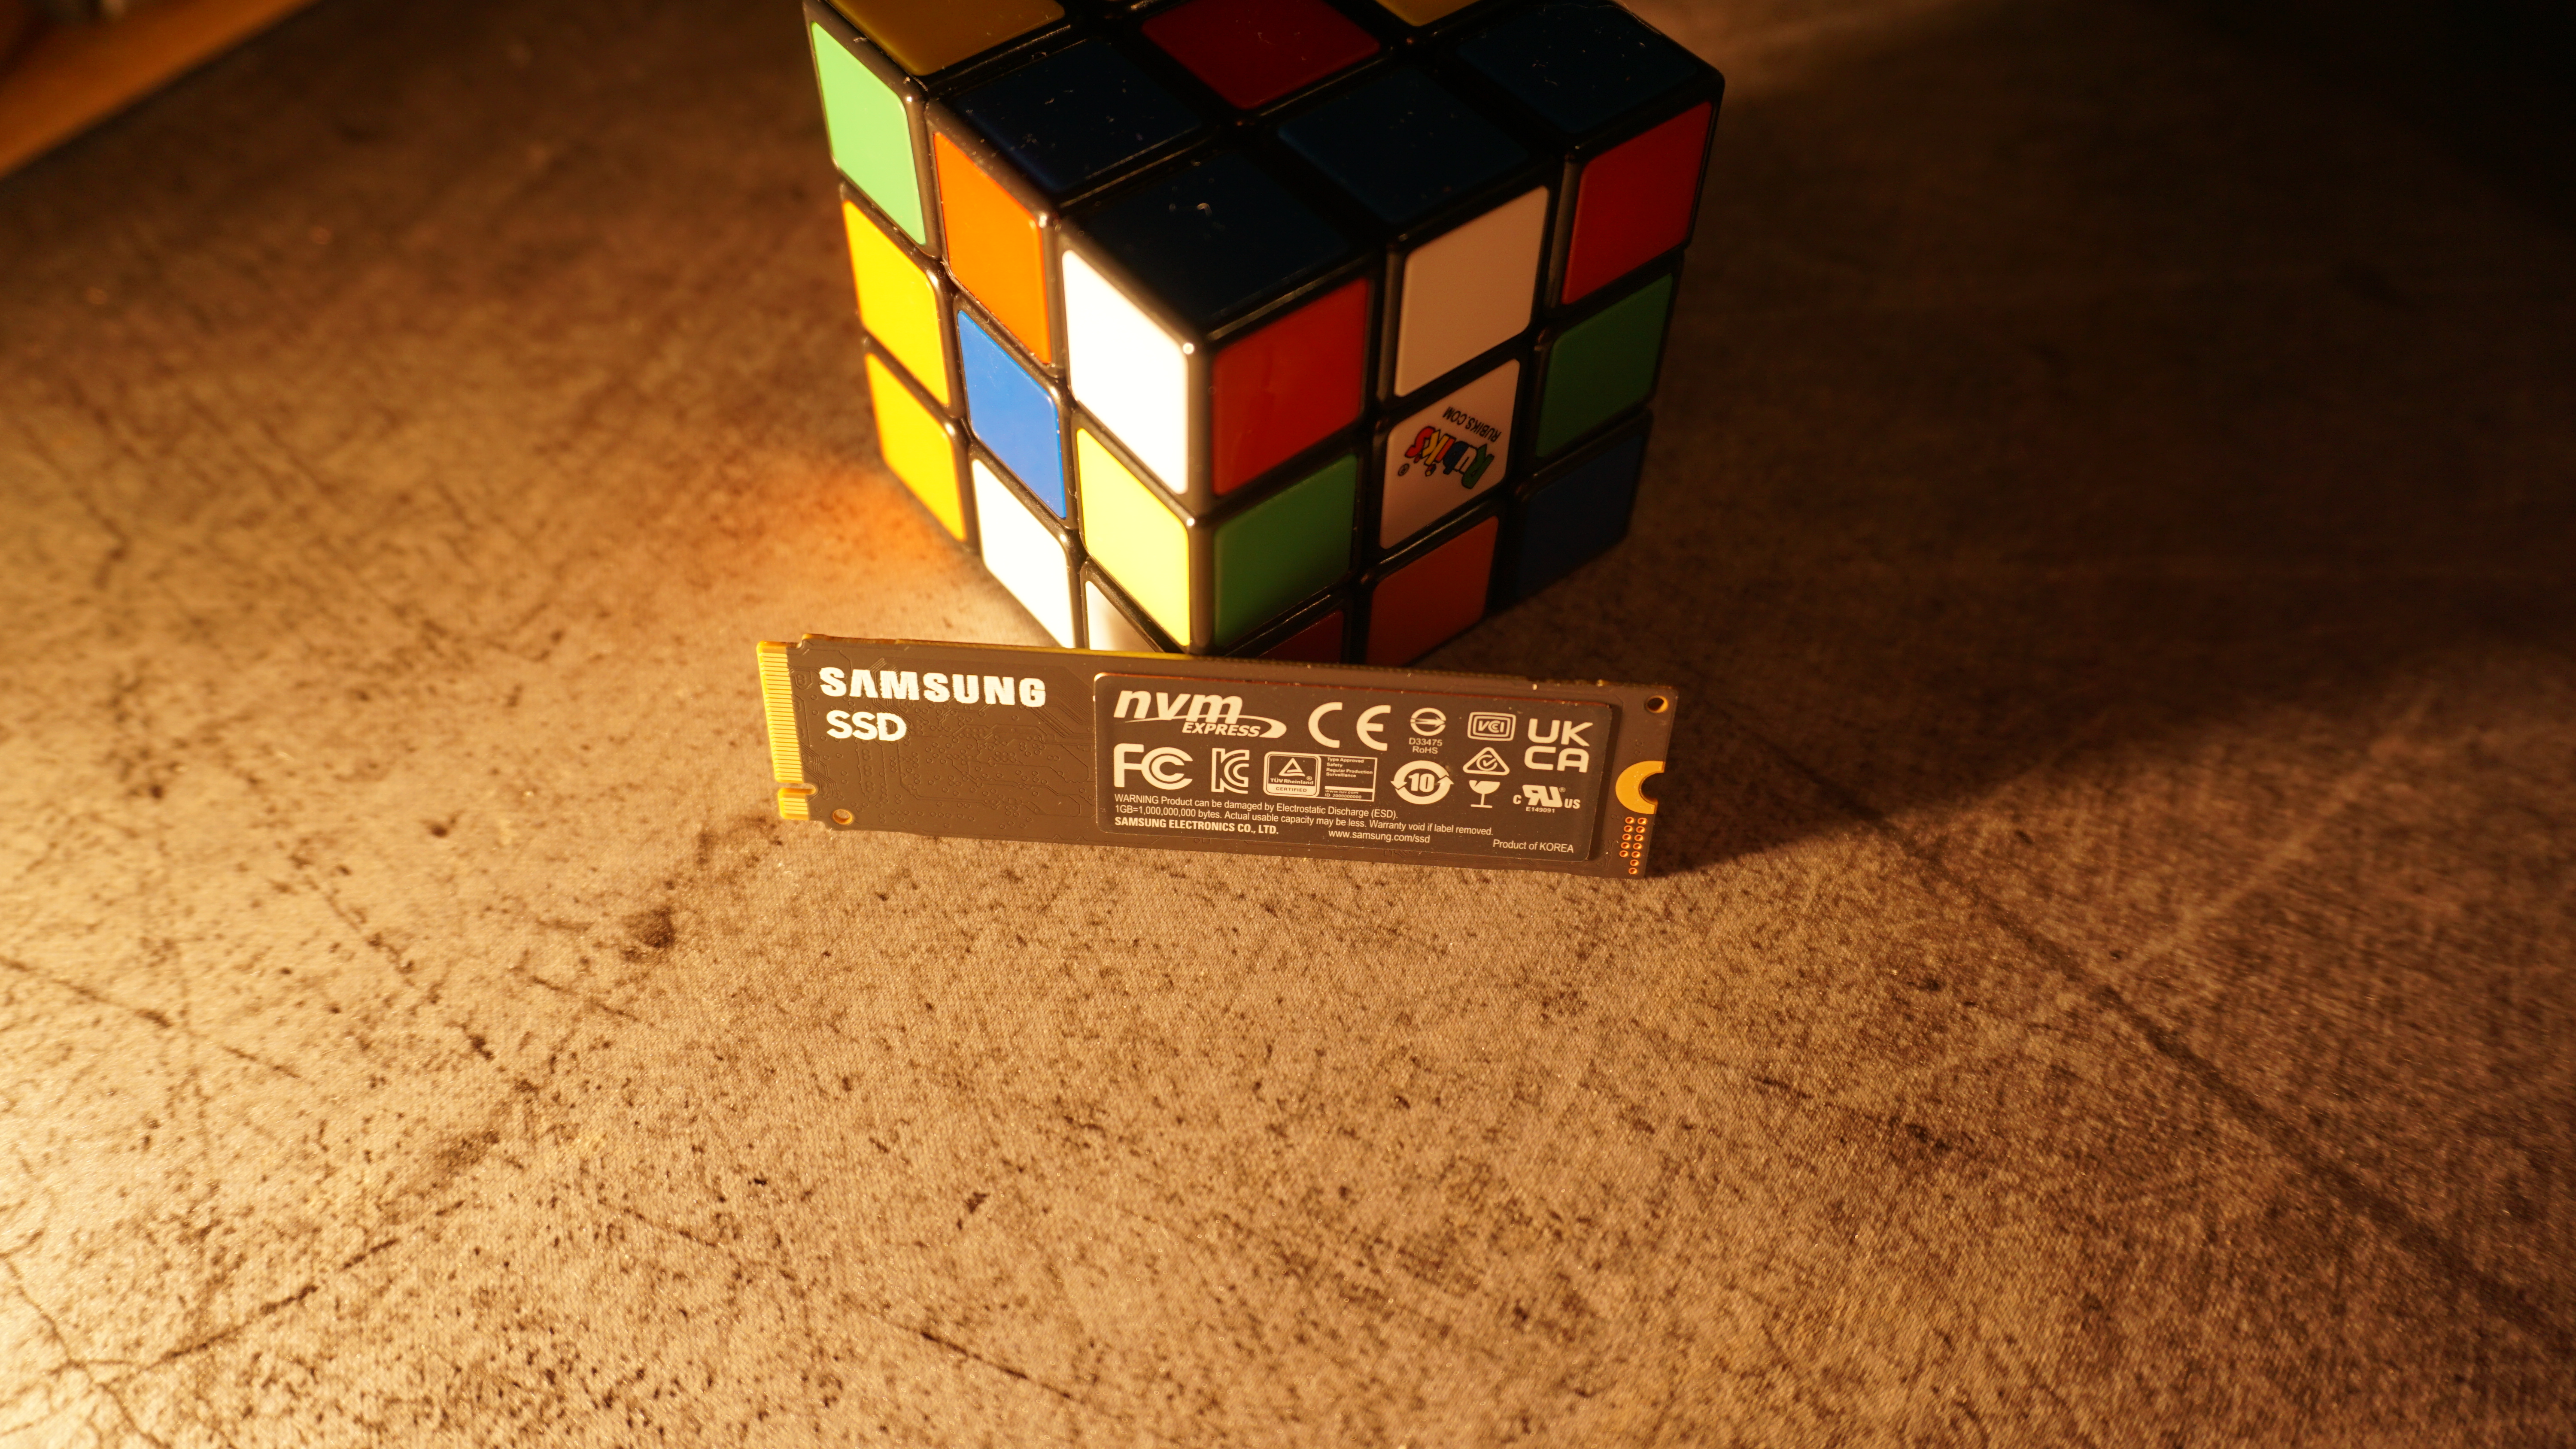 Samsung 980 SSD